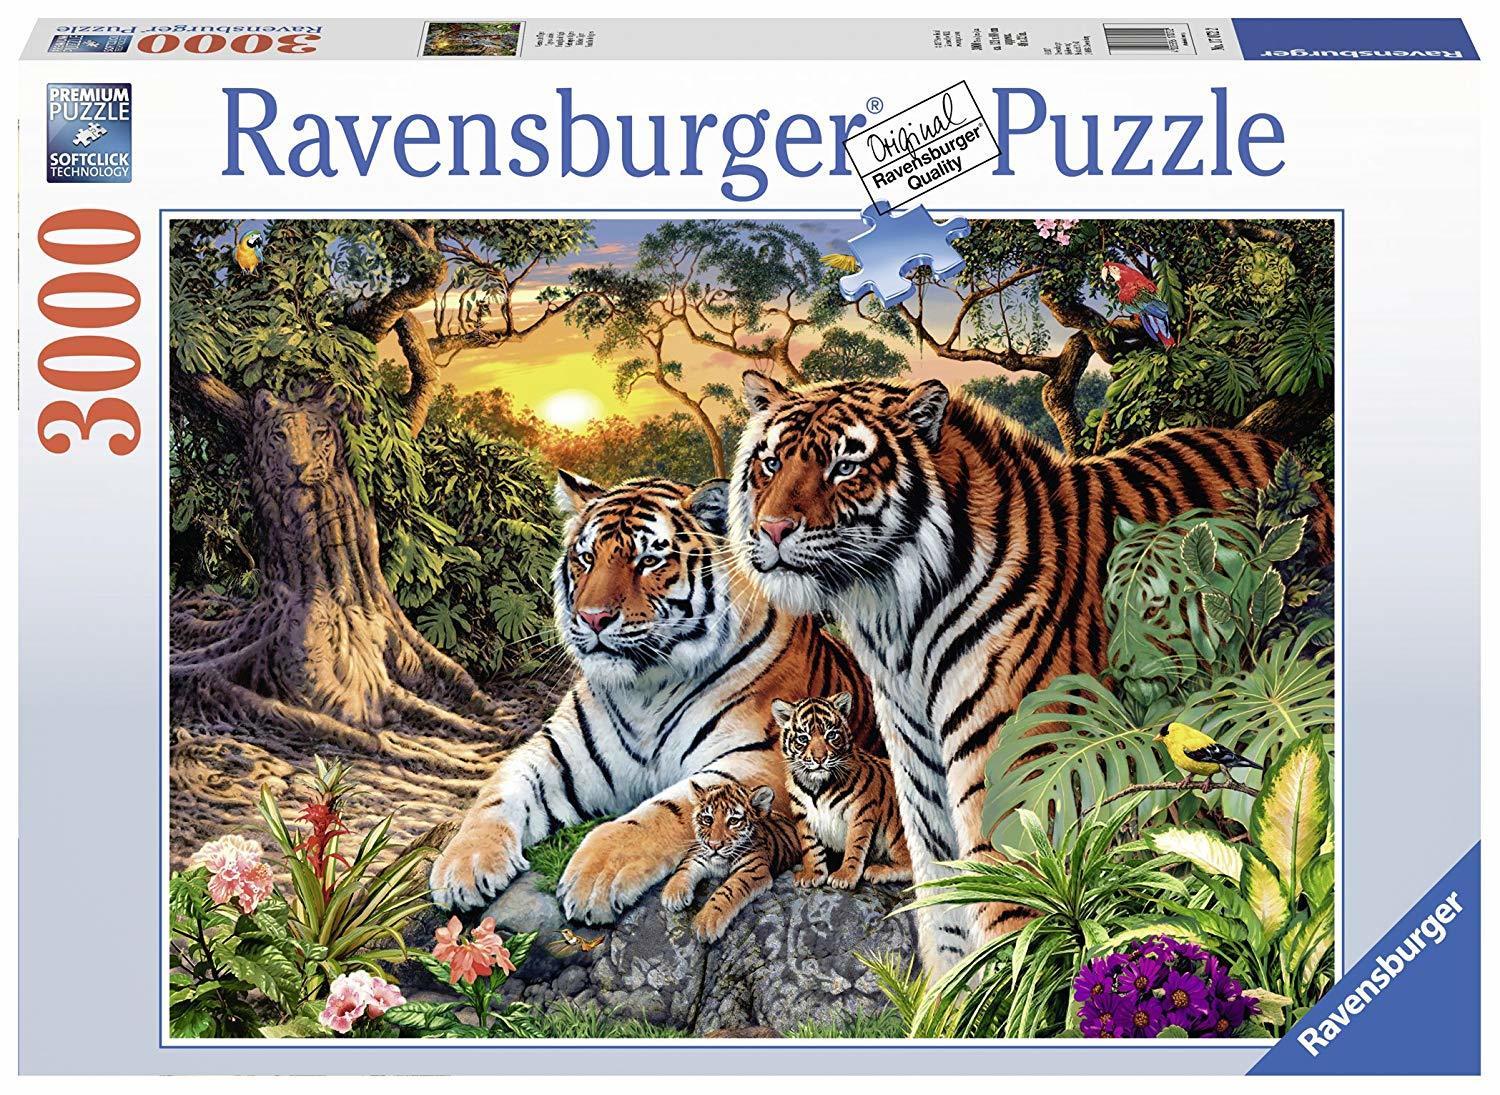 Ravensburger Puzzle 3000pc - Hidden Tigers